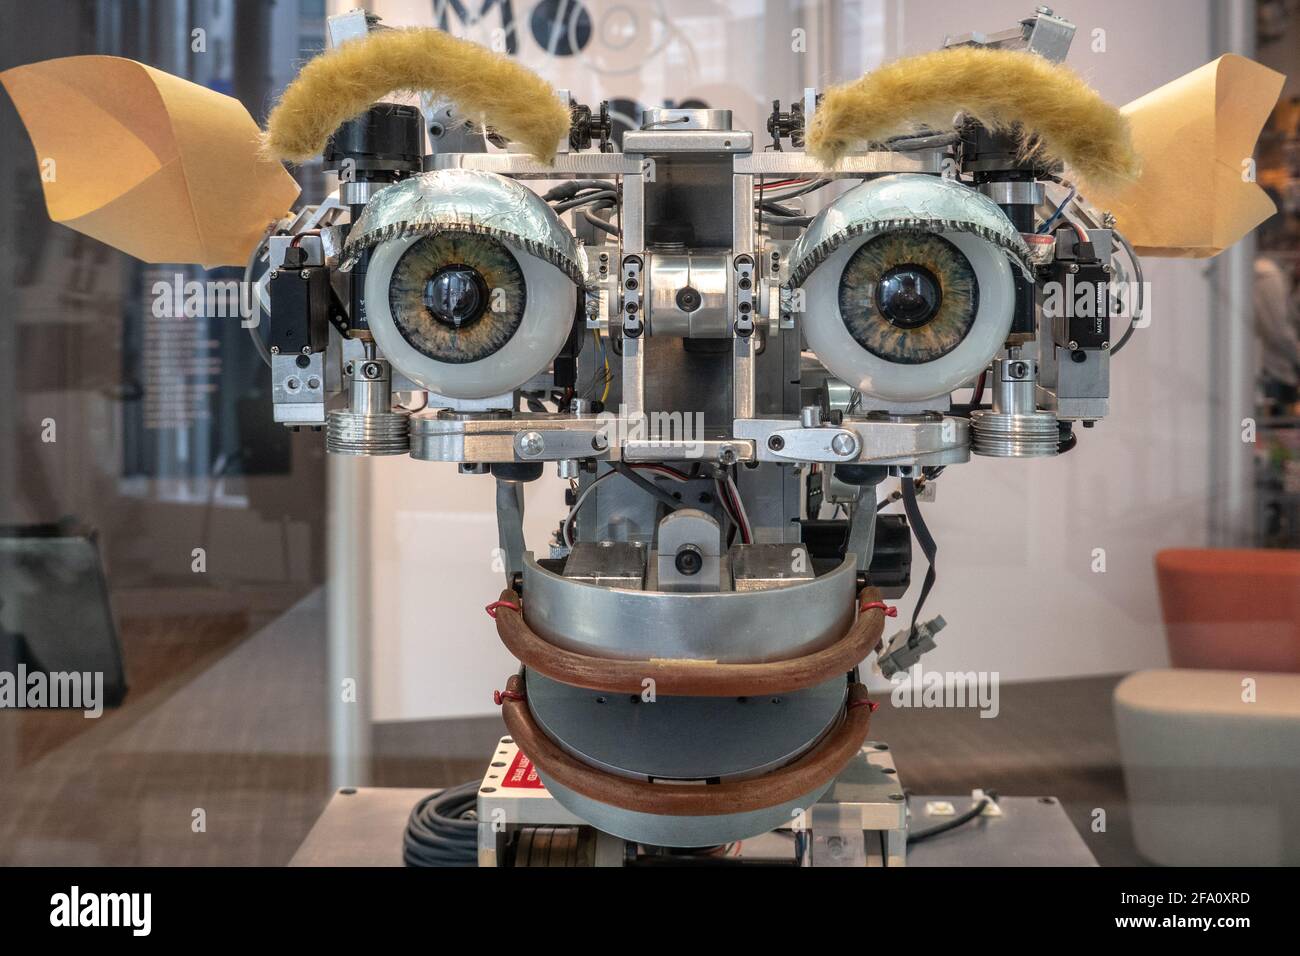 Kismet robot 1996-2000, MIT Museum display, Cambridge MA USA Stock Photo